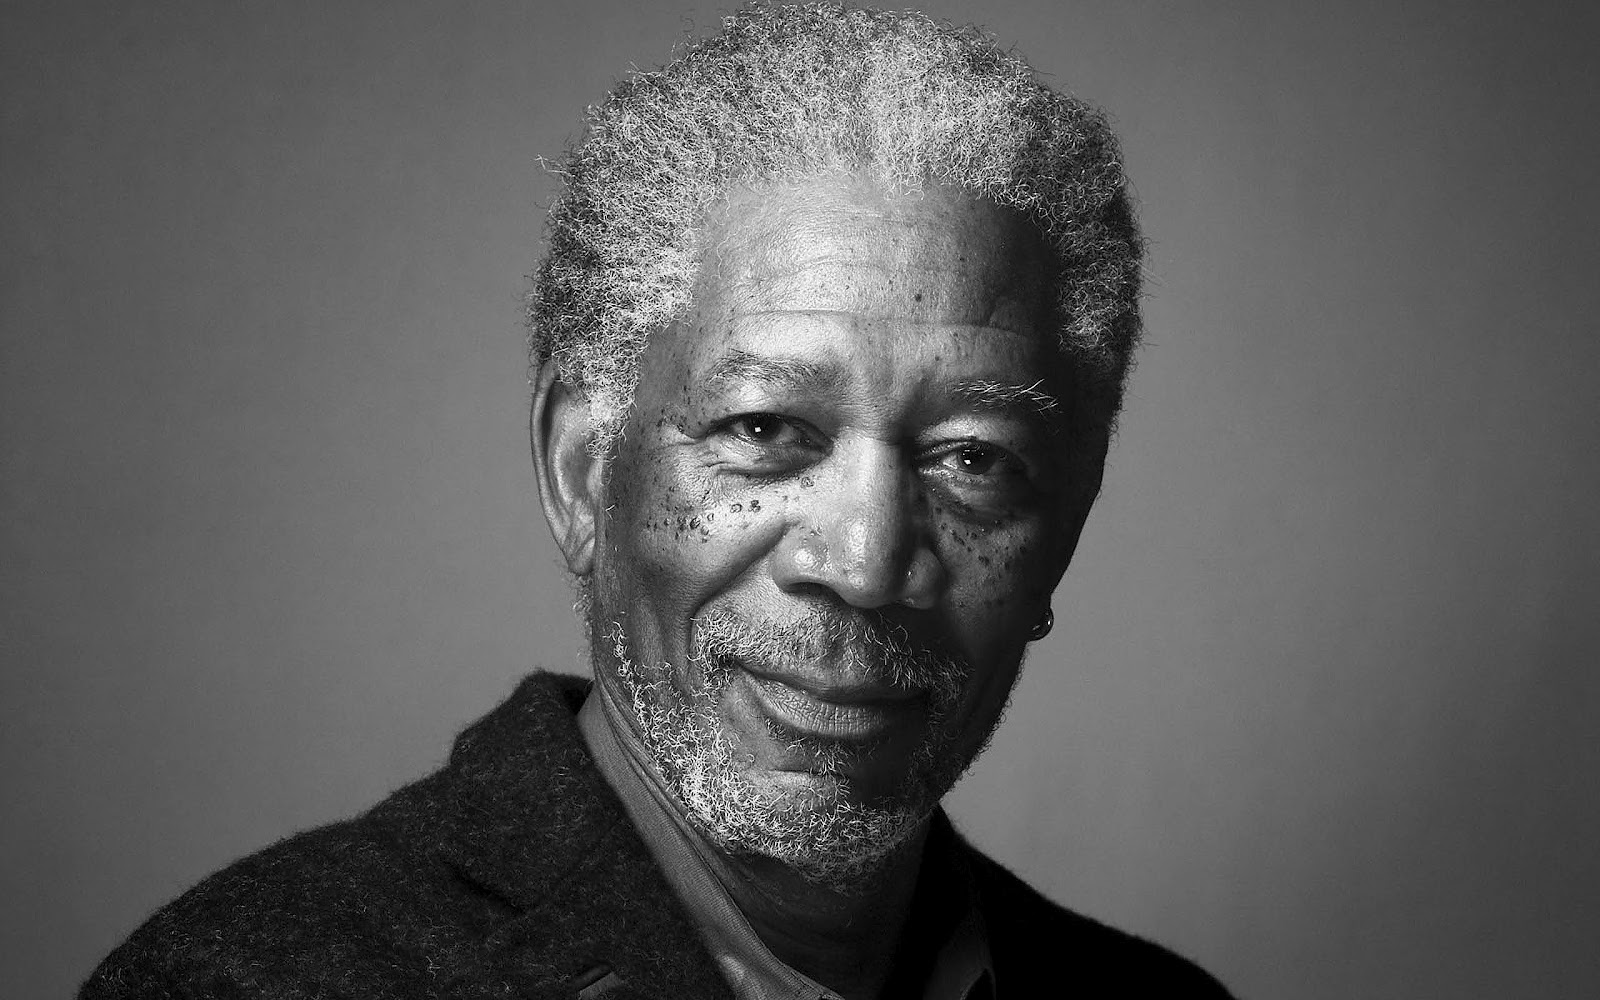 Morgan Freeman Backgrounds, Compatible - PC, Mobile, Gadgets| 1600x1000 px